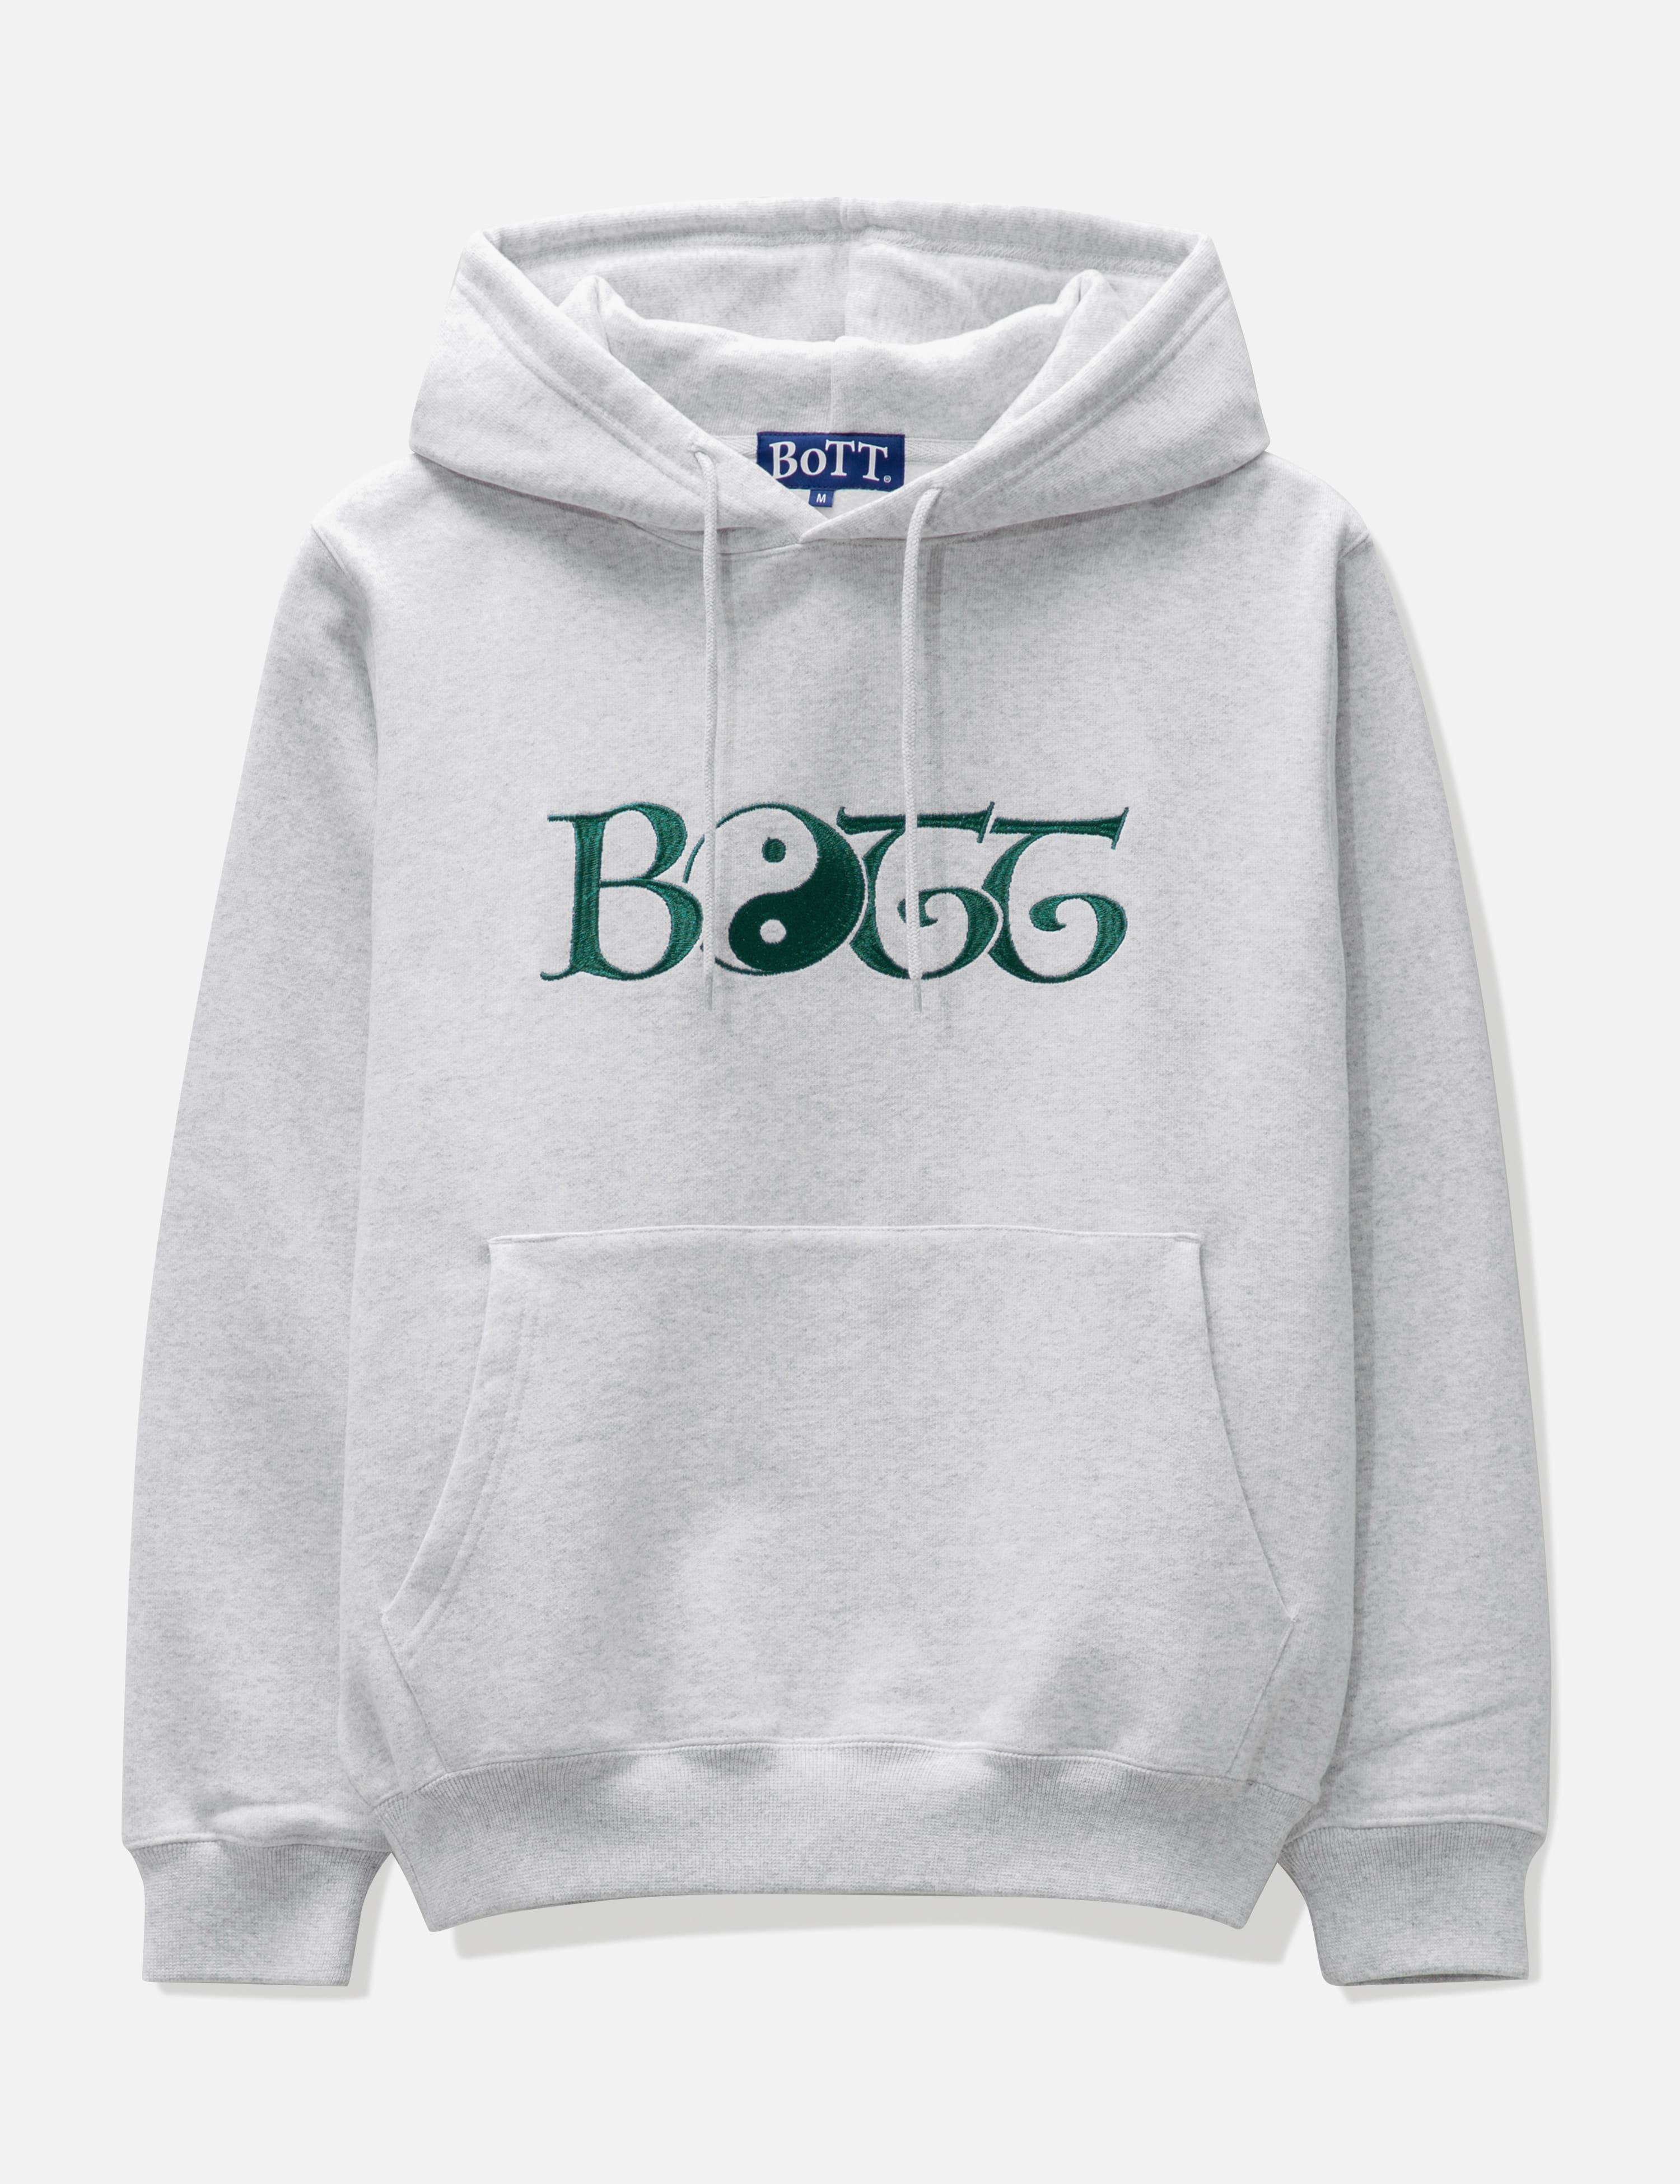 BoTT - BoTT OG Logo Hoodie | HBX - Globally Curated Fashion and